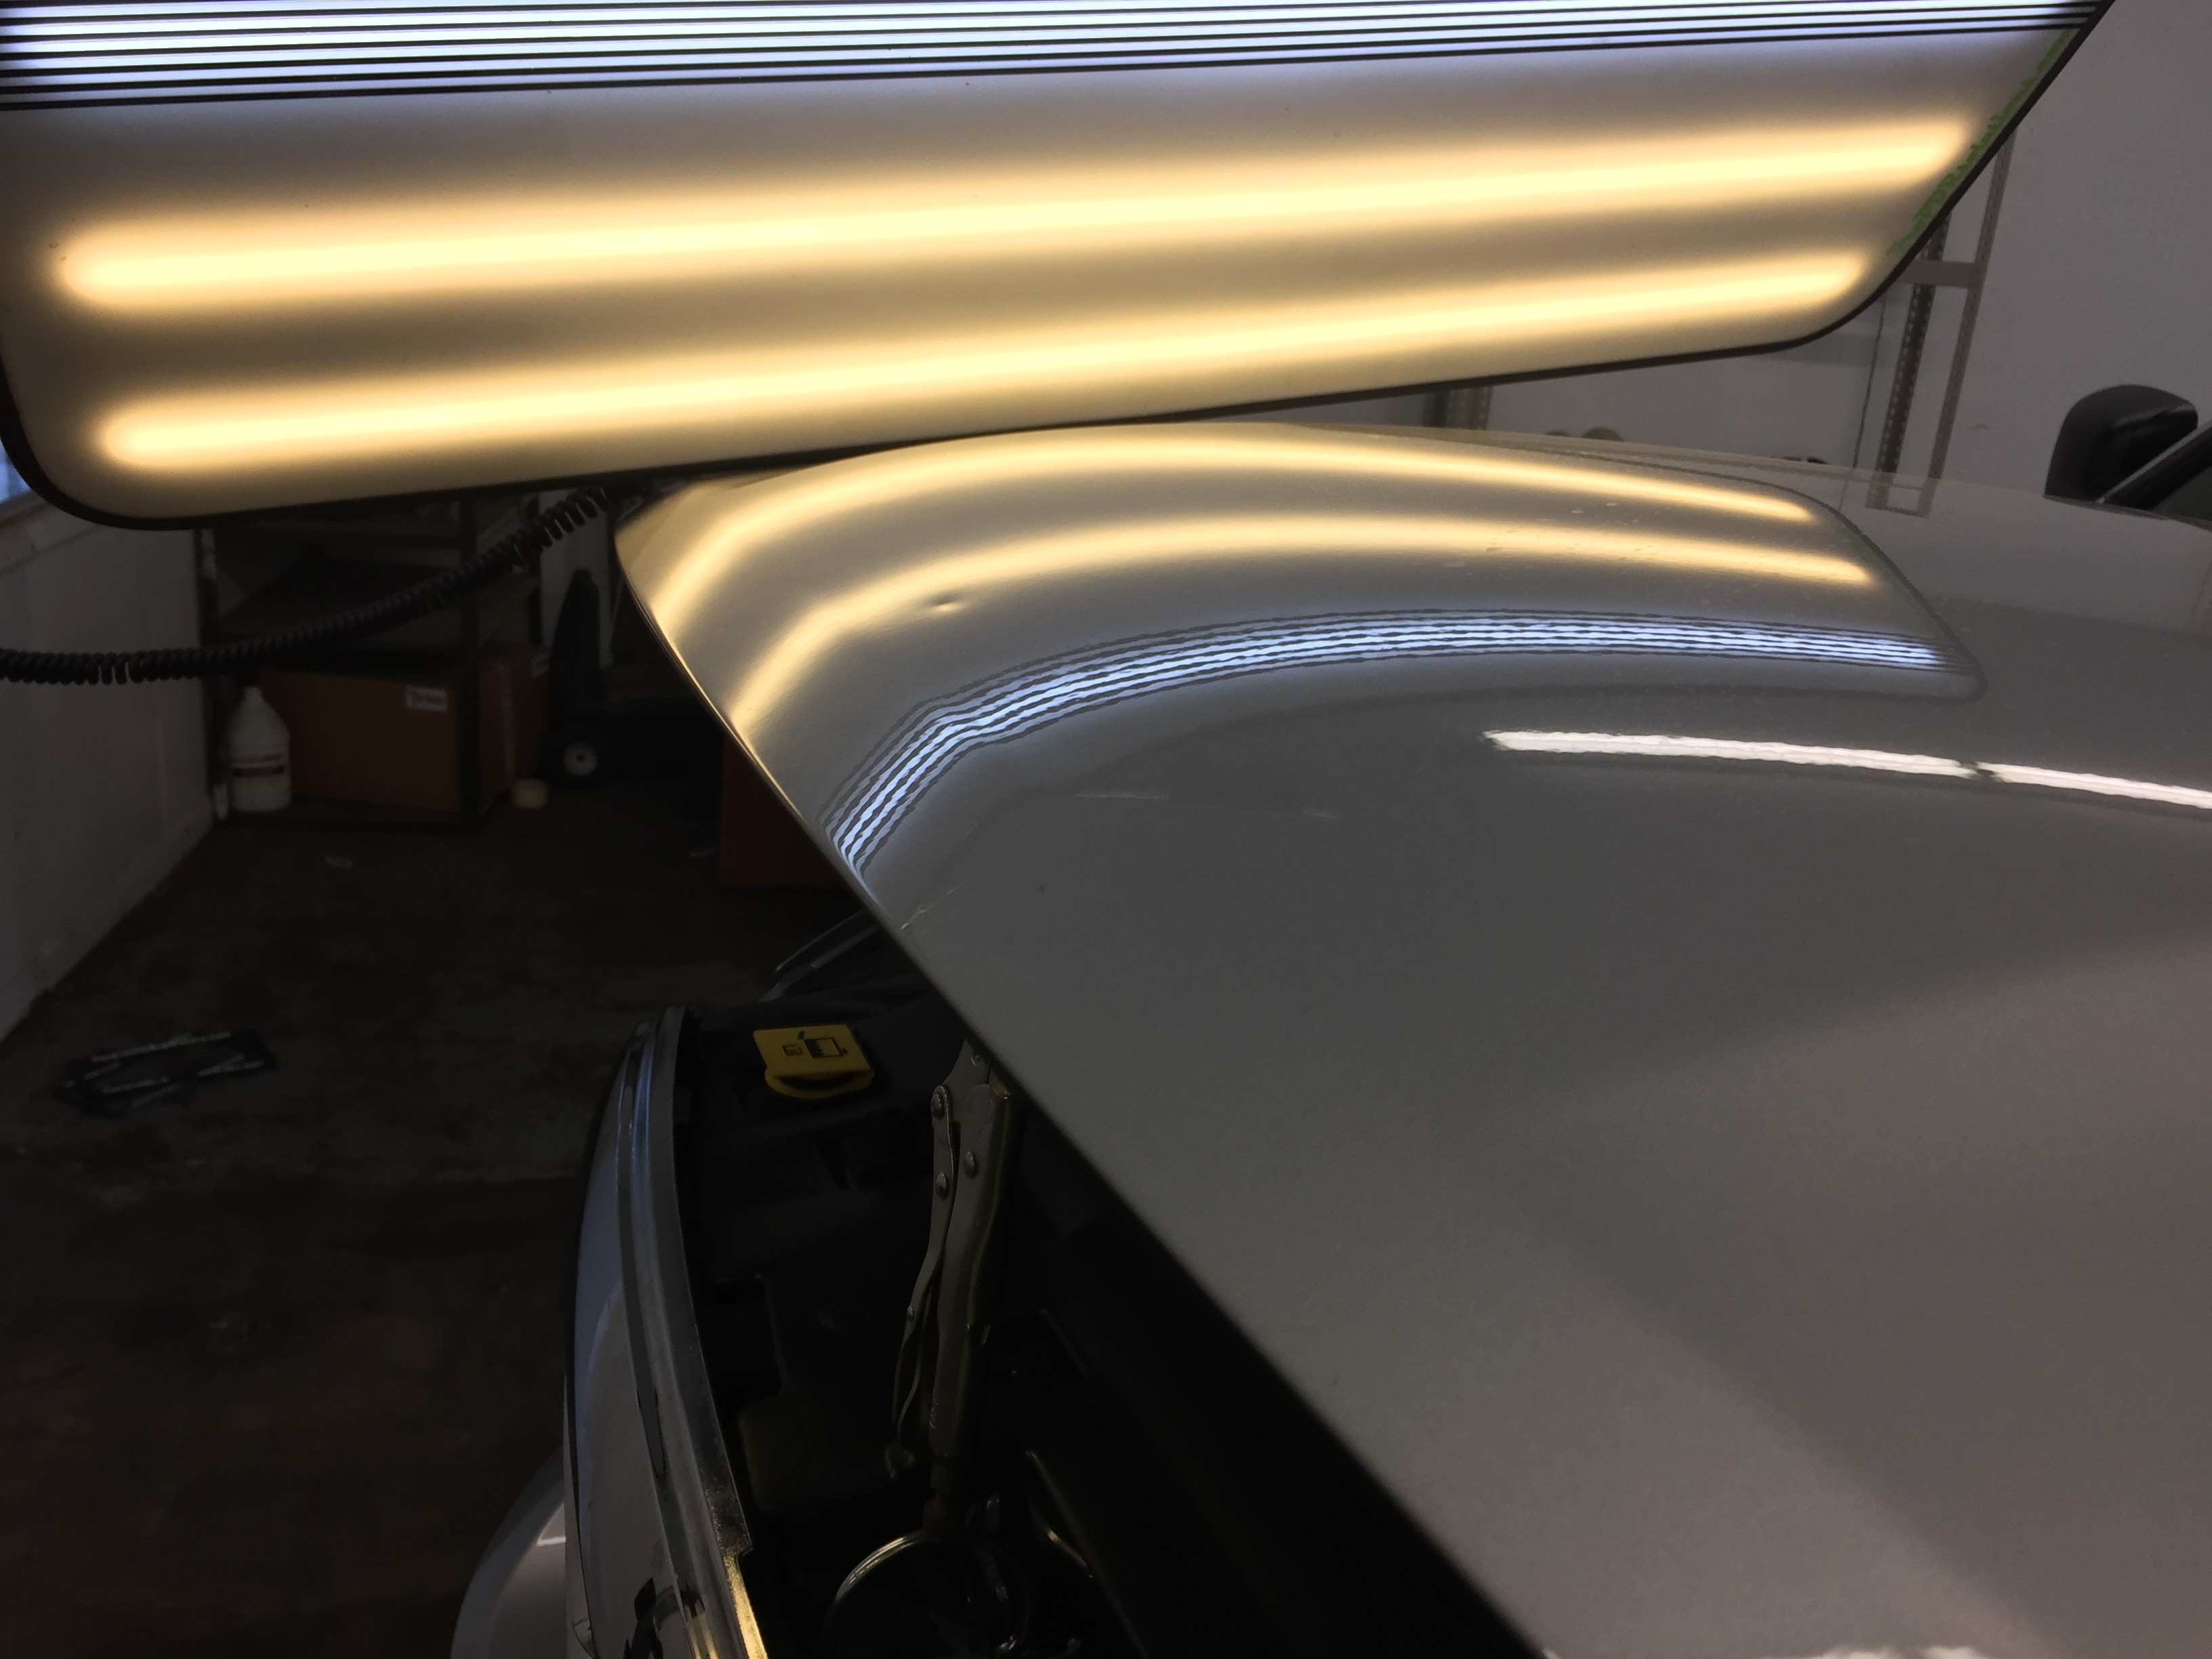 2015 Dodge Ram hail damage on hood, paintless dent repair, Springfield, IL. http://217dent.com by Michael Bocek